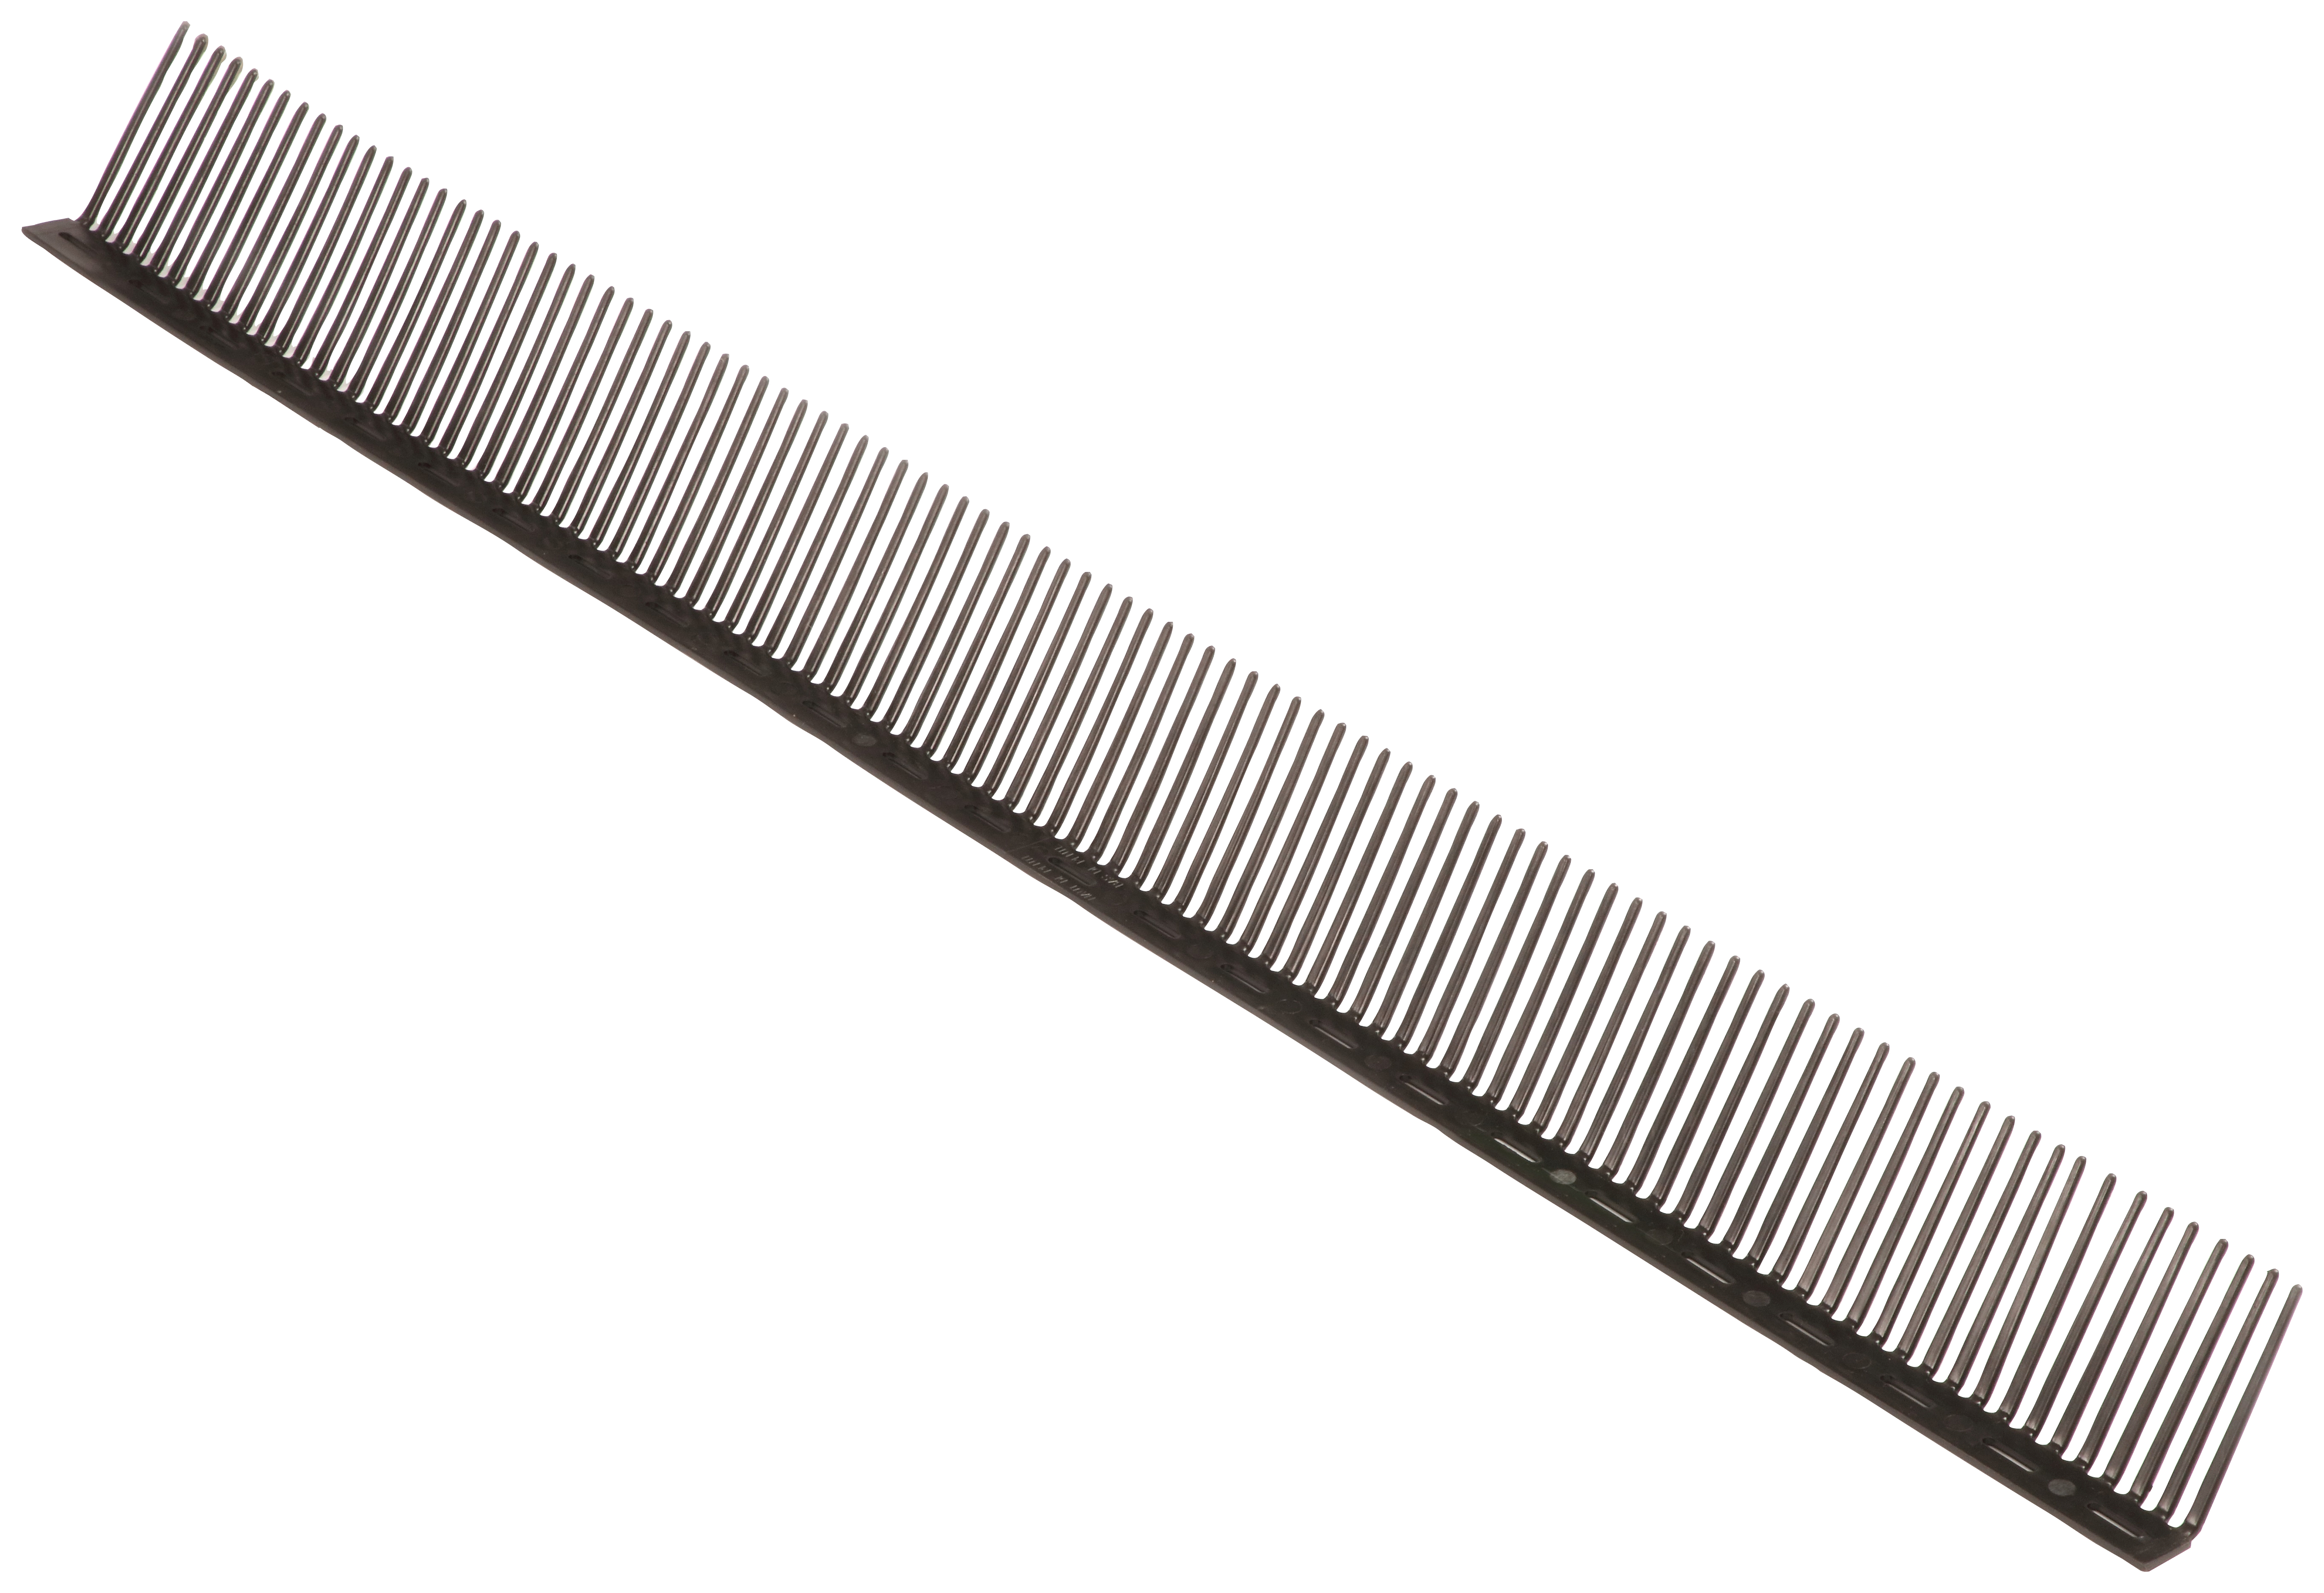 Onduline Eaves Ventilator Strip - 1000 x 75mm